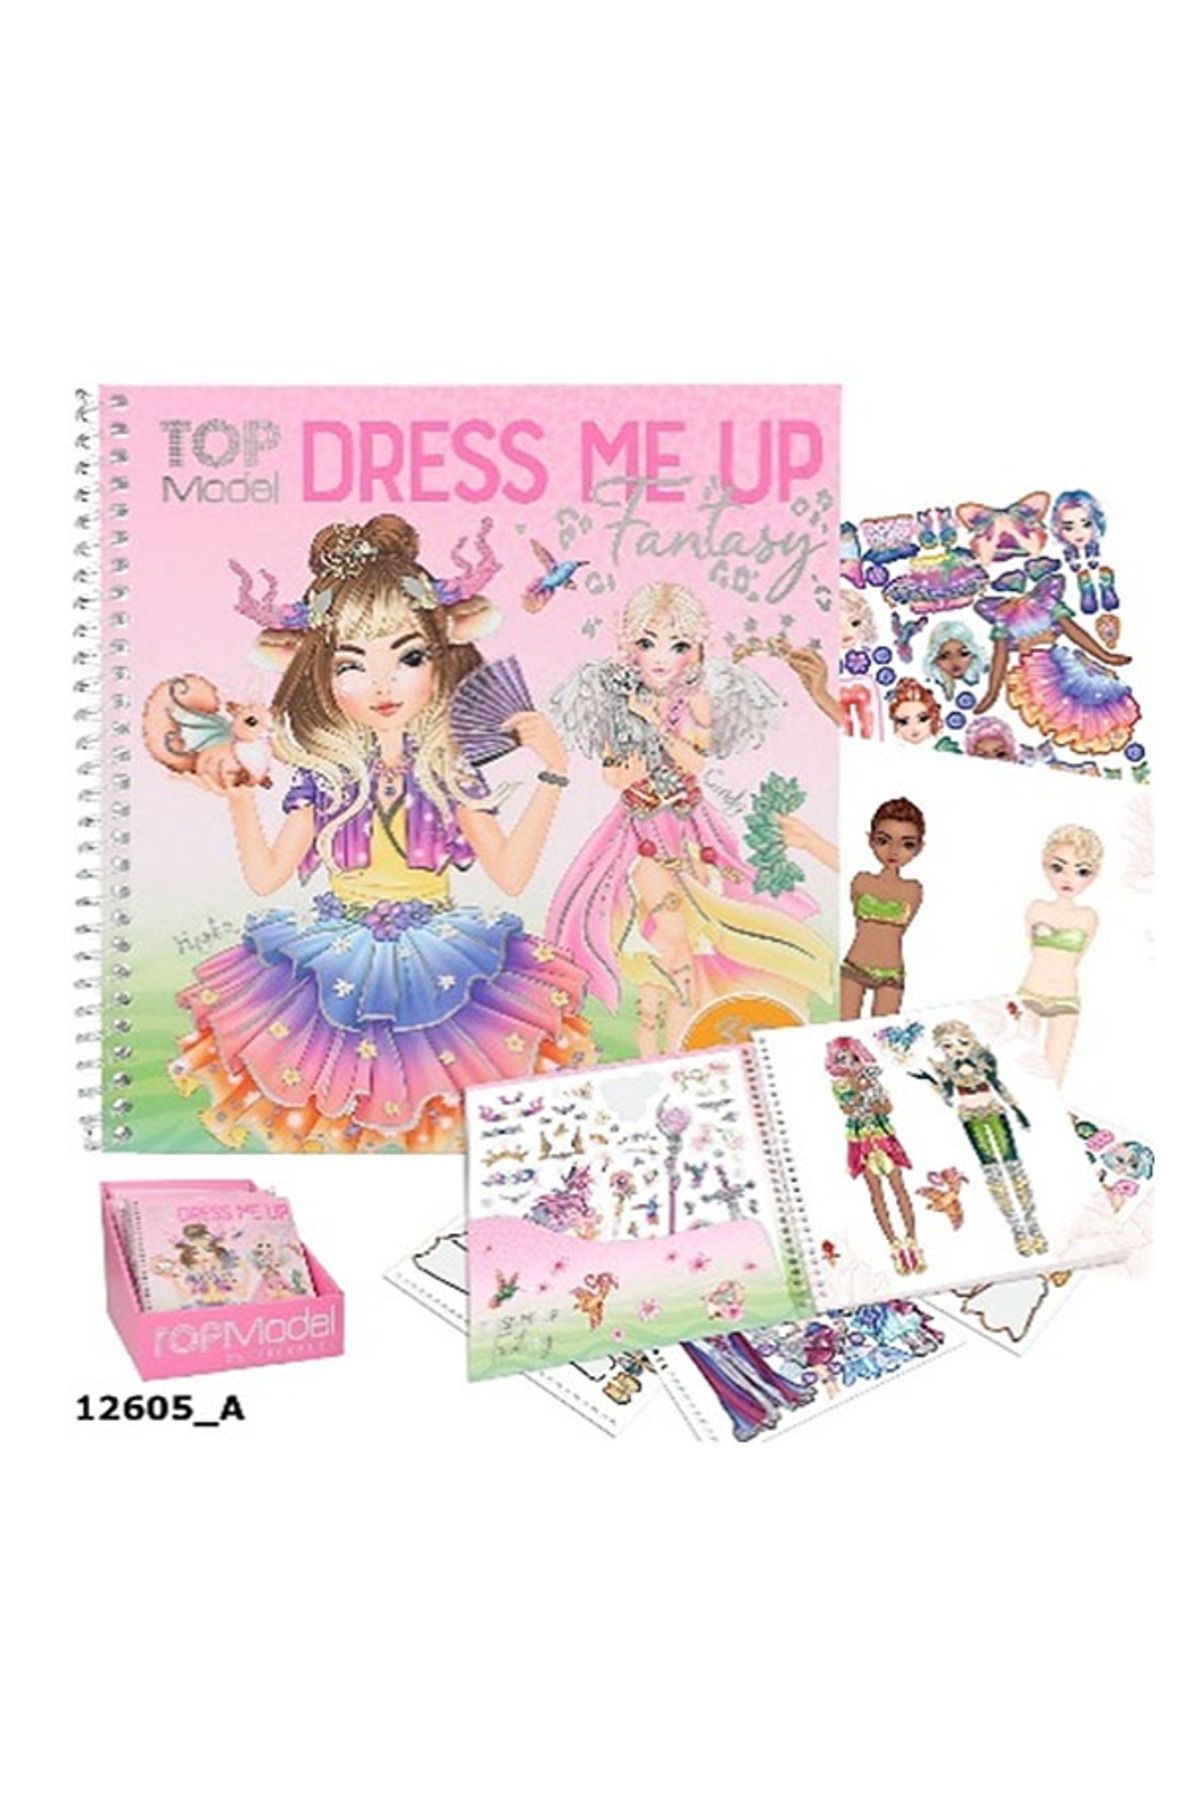 TOP MODEL Libro para Vestir - Top Model Dress me uP Fantasy